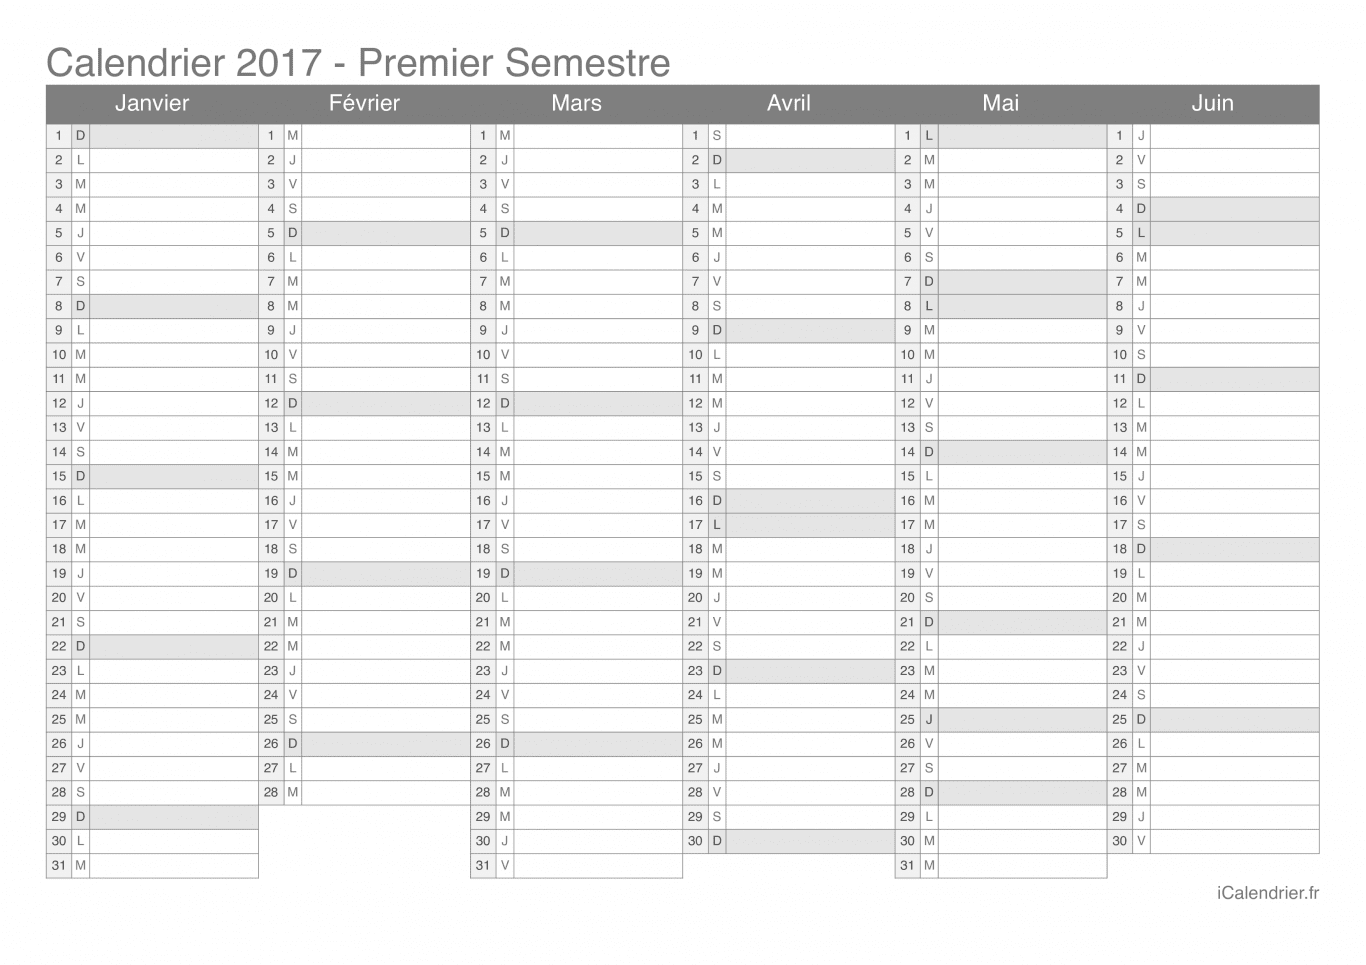 Calendrier par semestre 2017